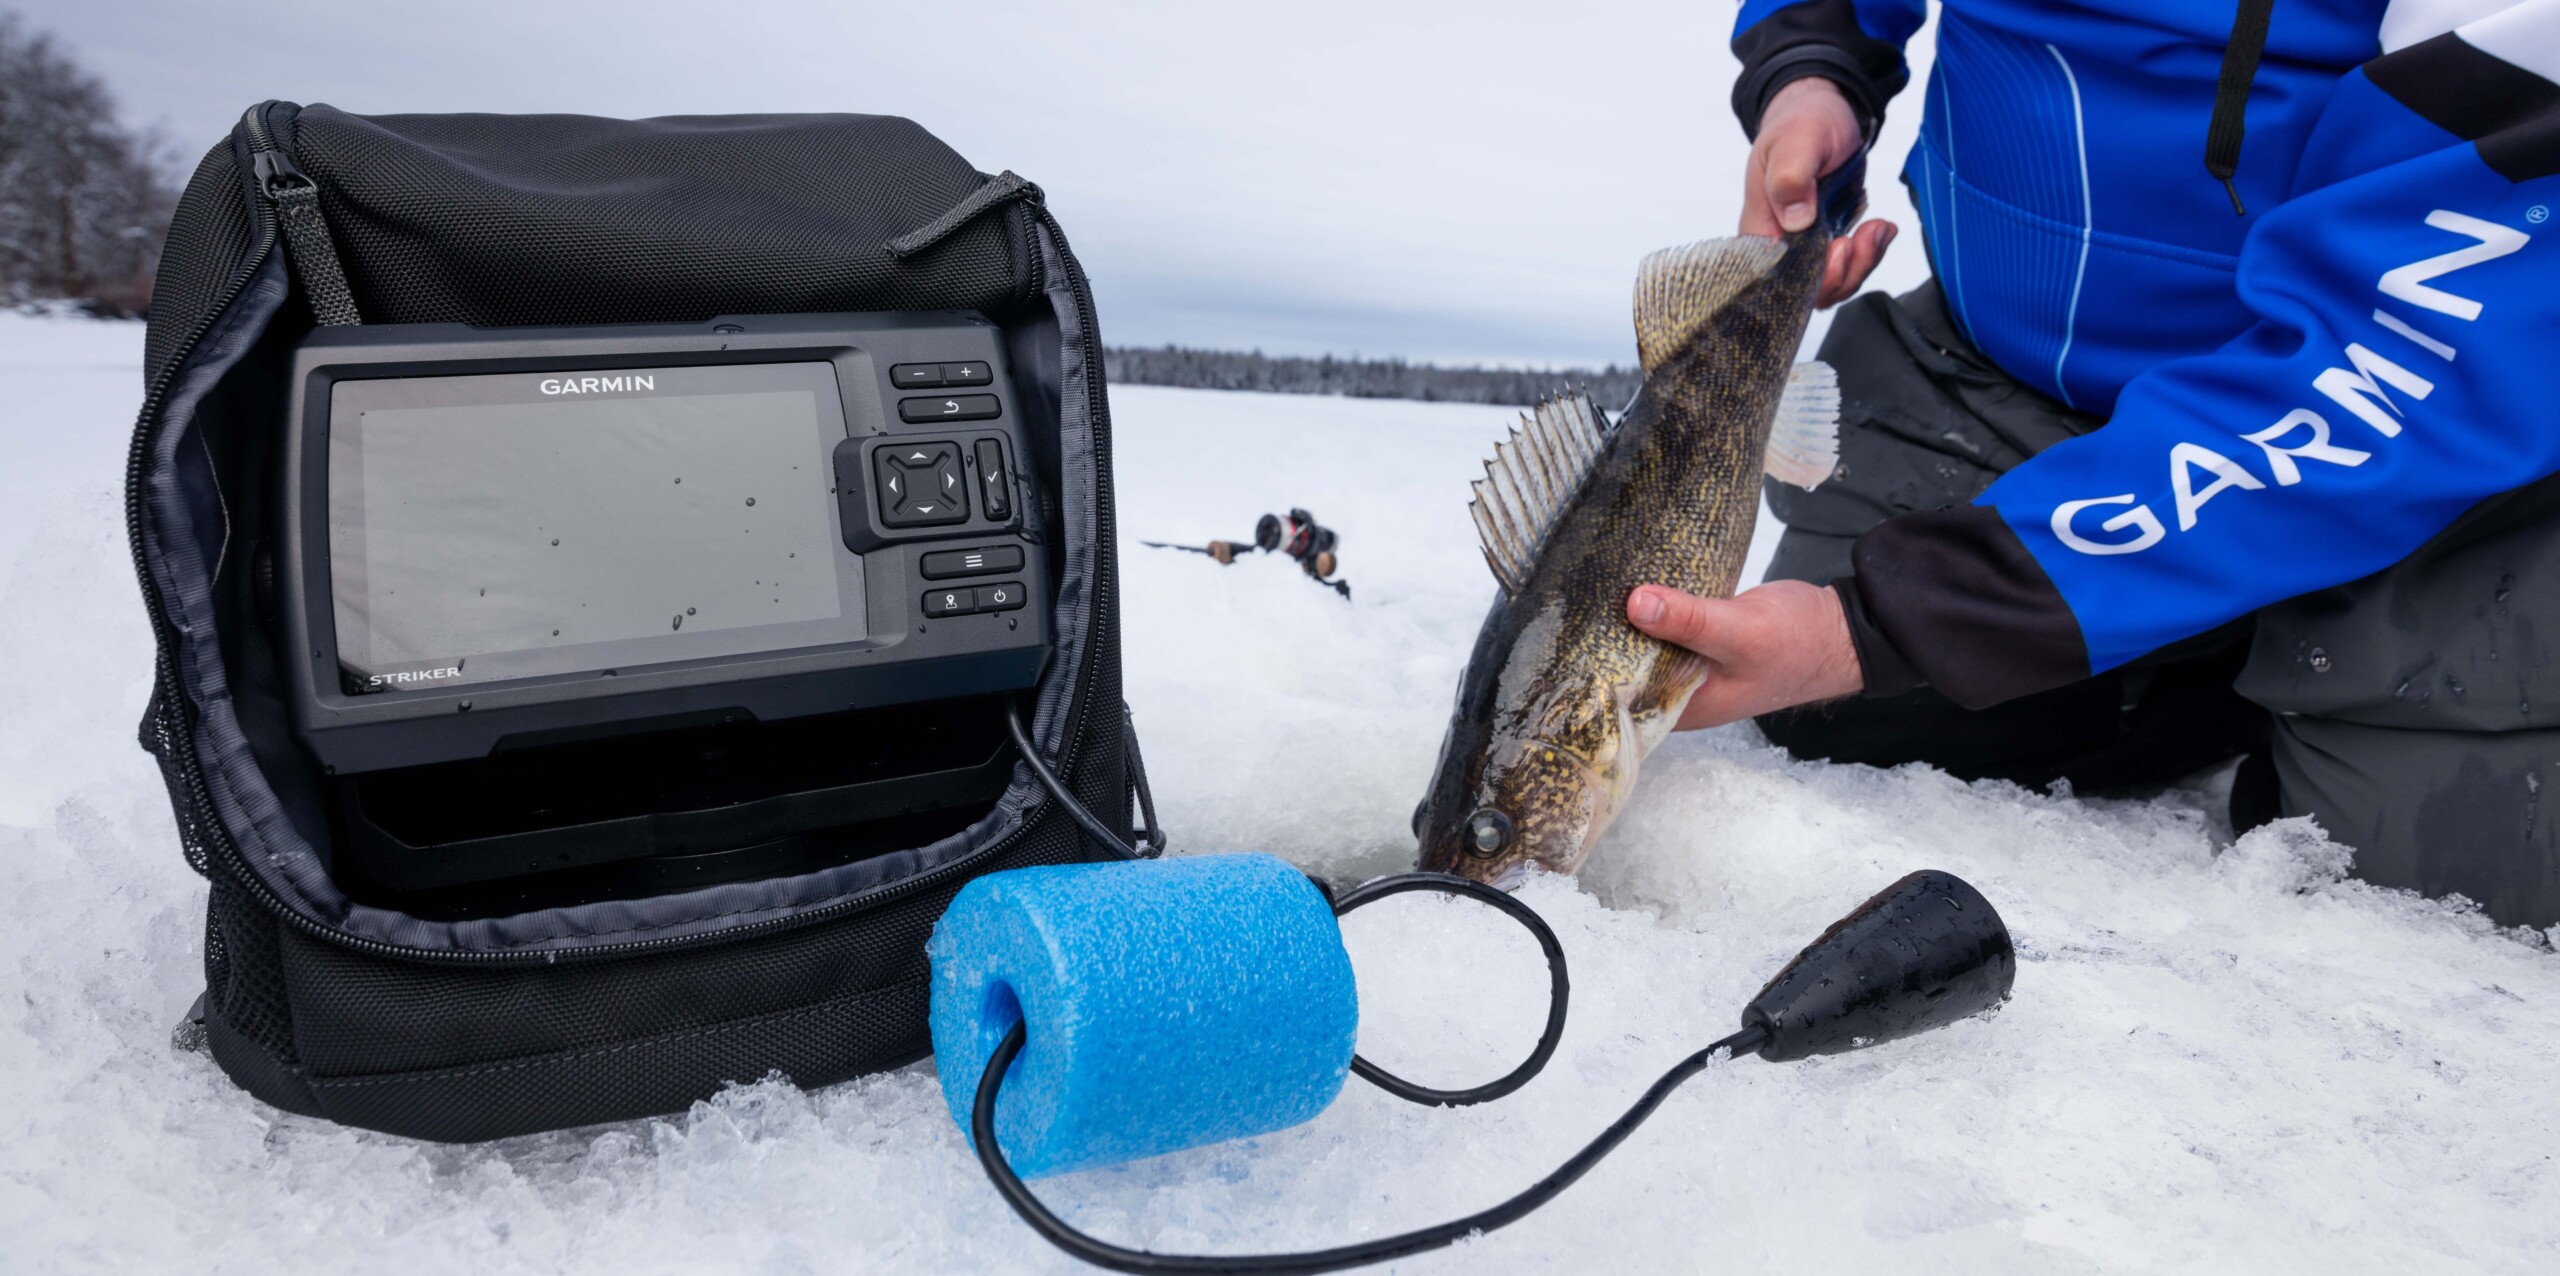 Garmin Ice Fishing Striker Vivid 5